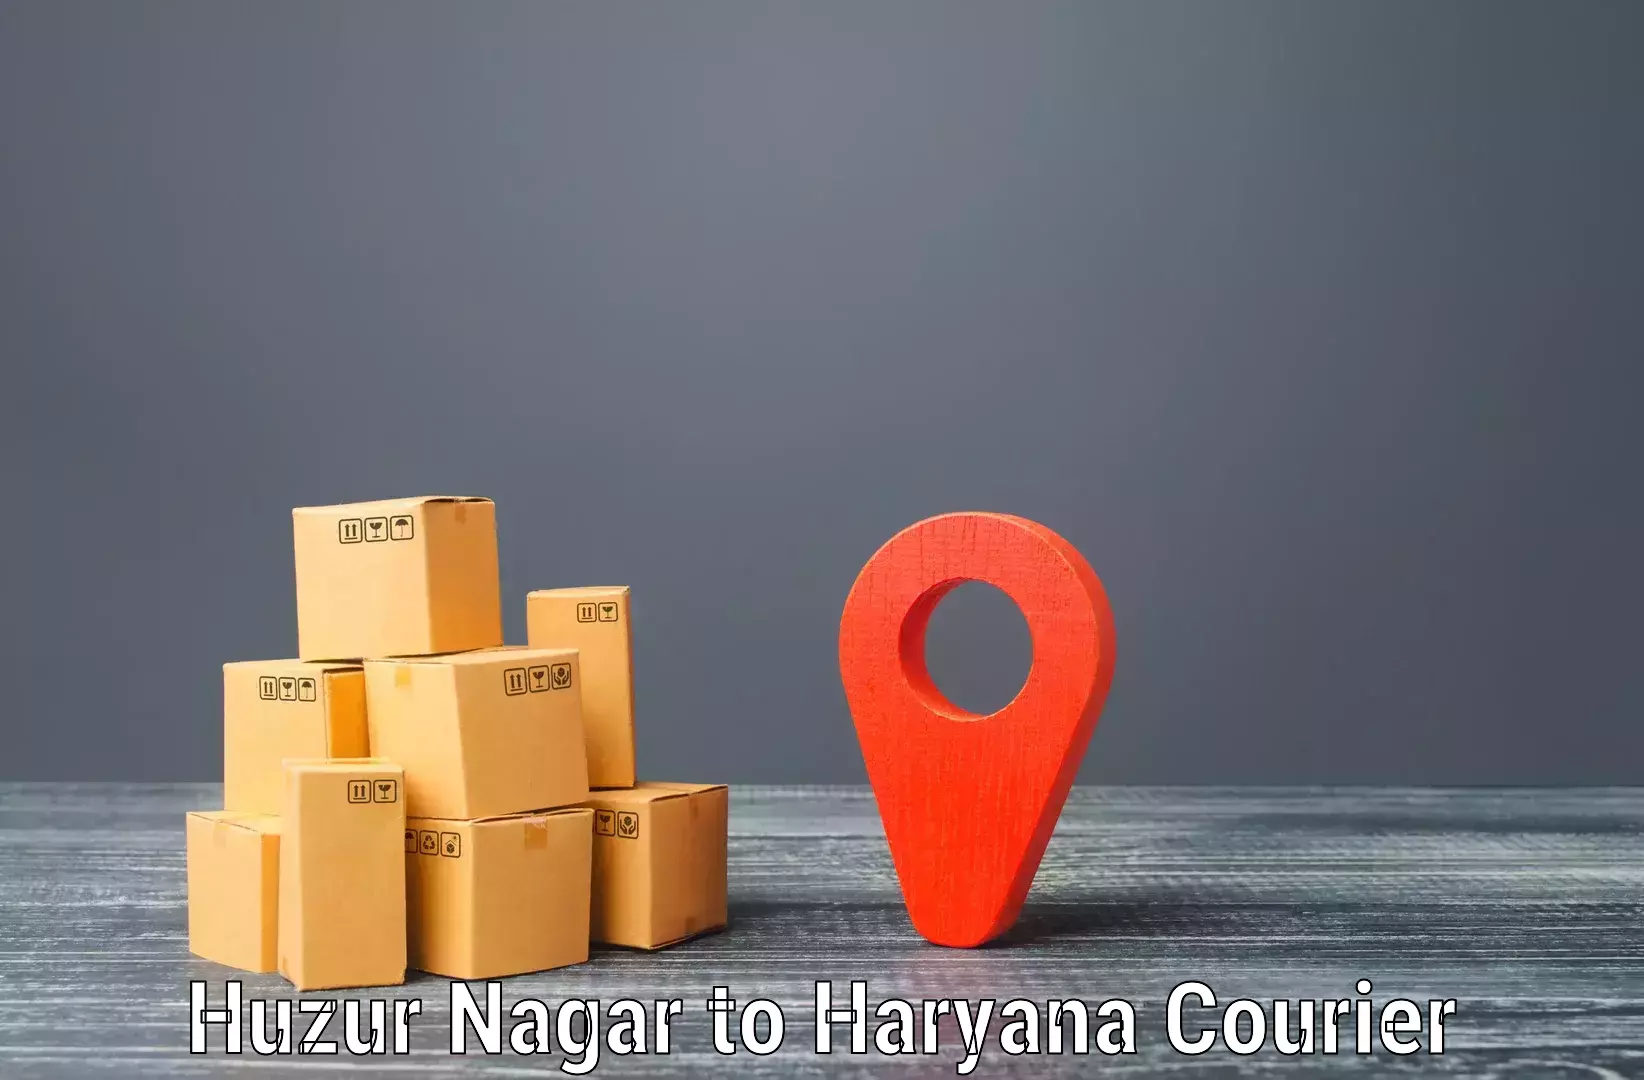 Express package handling Huzur Nagar to Palwal